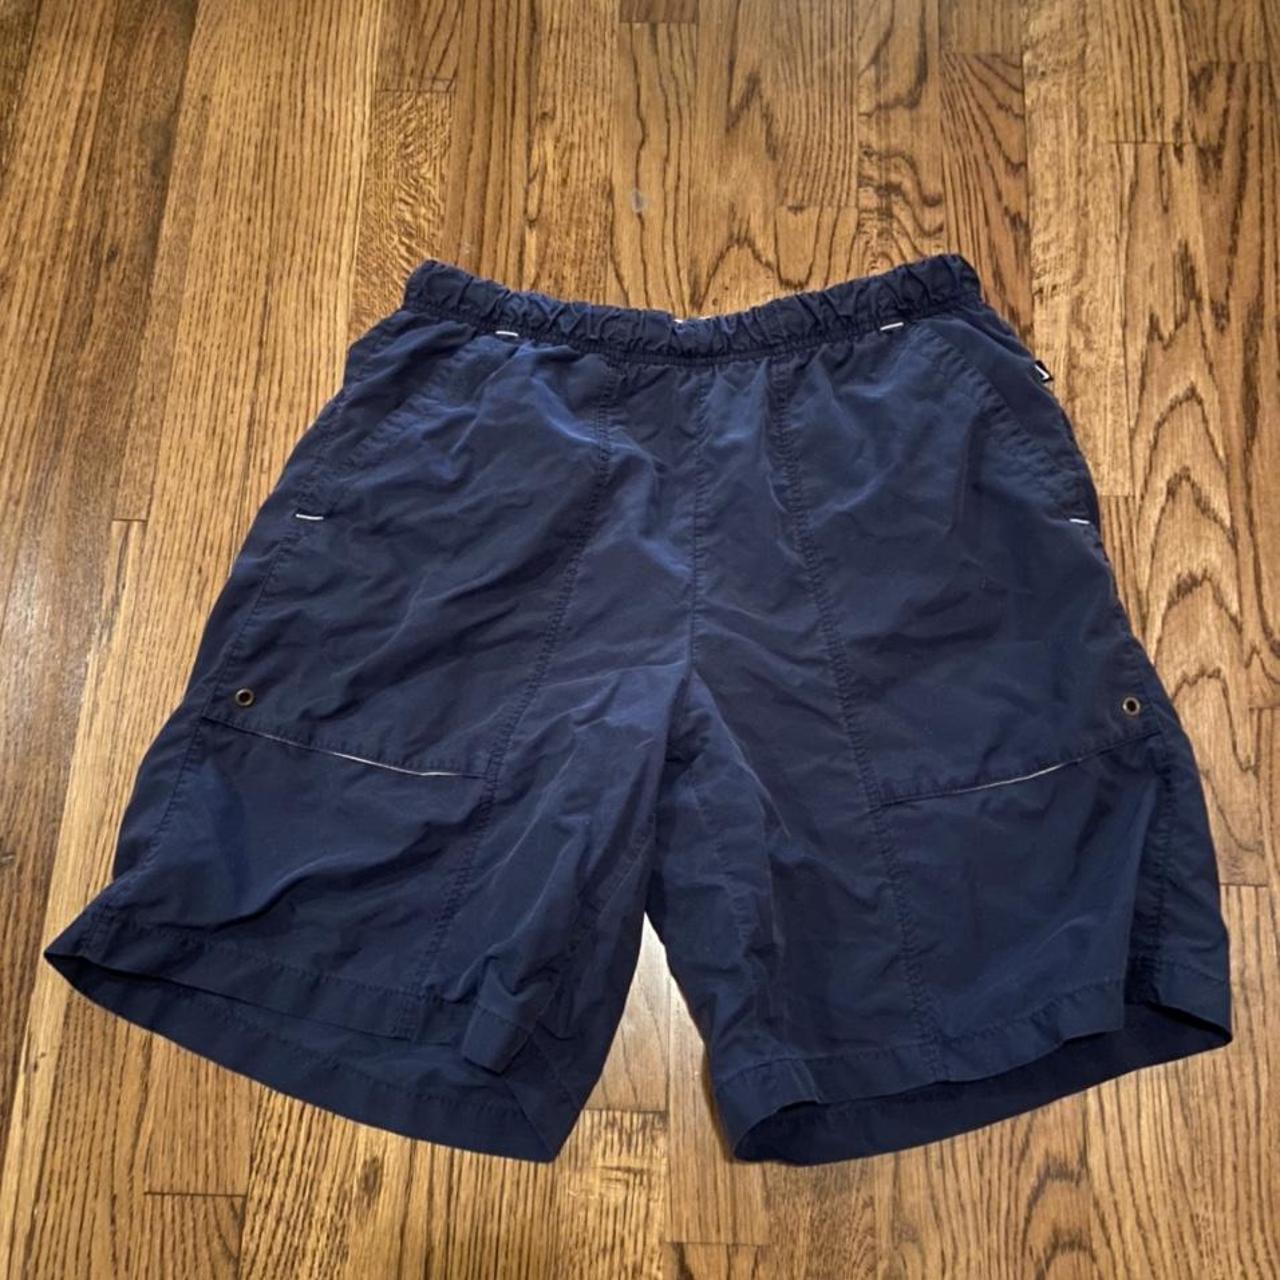 Nike Men's Navy Swim-briefs-shorts